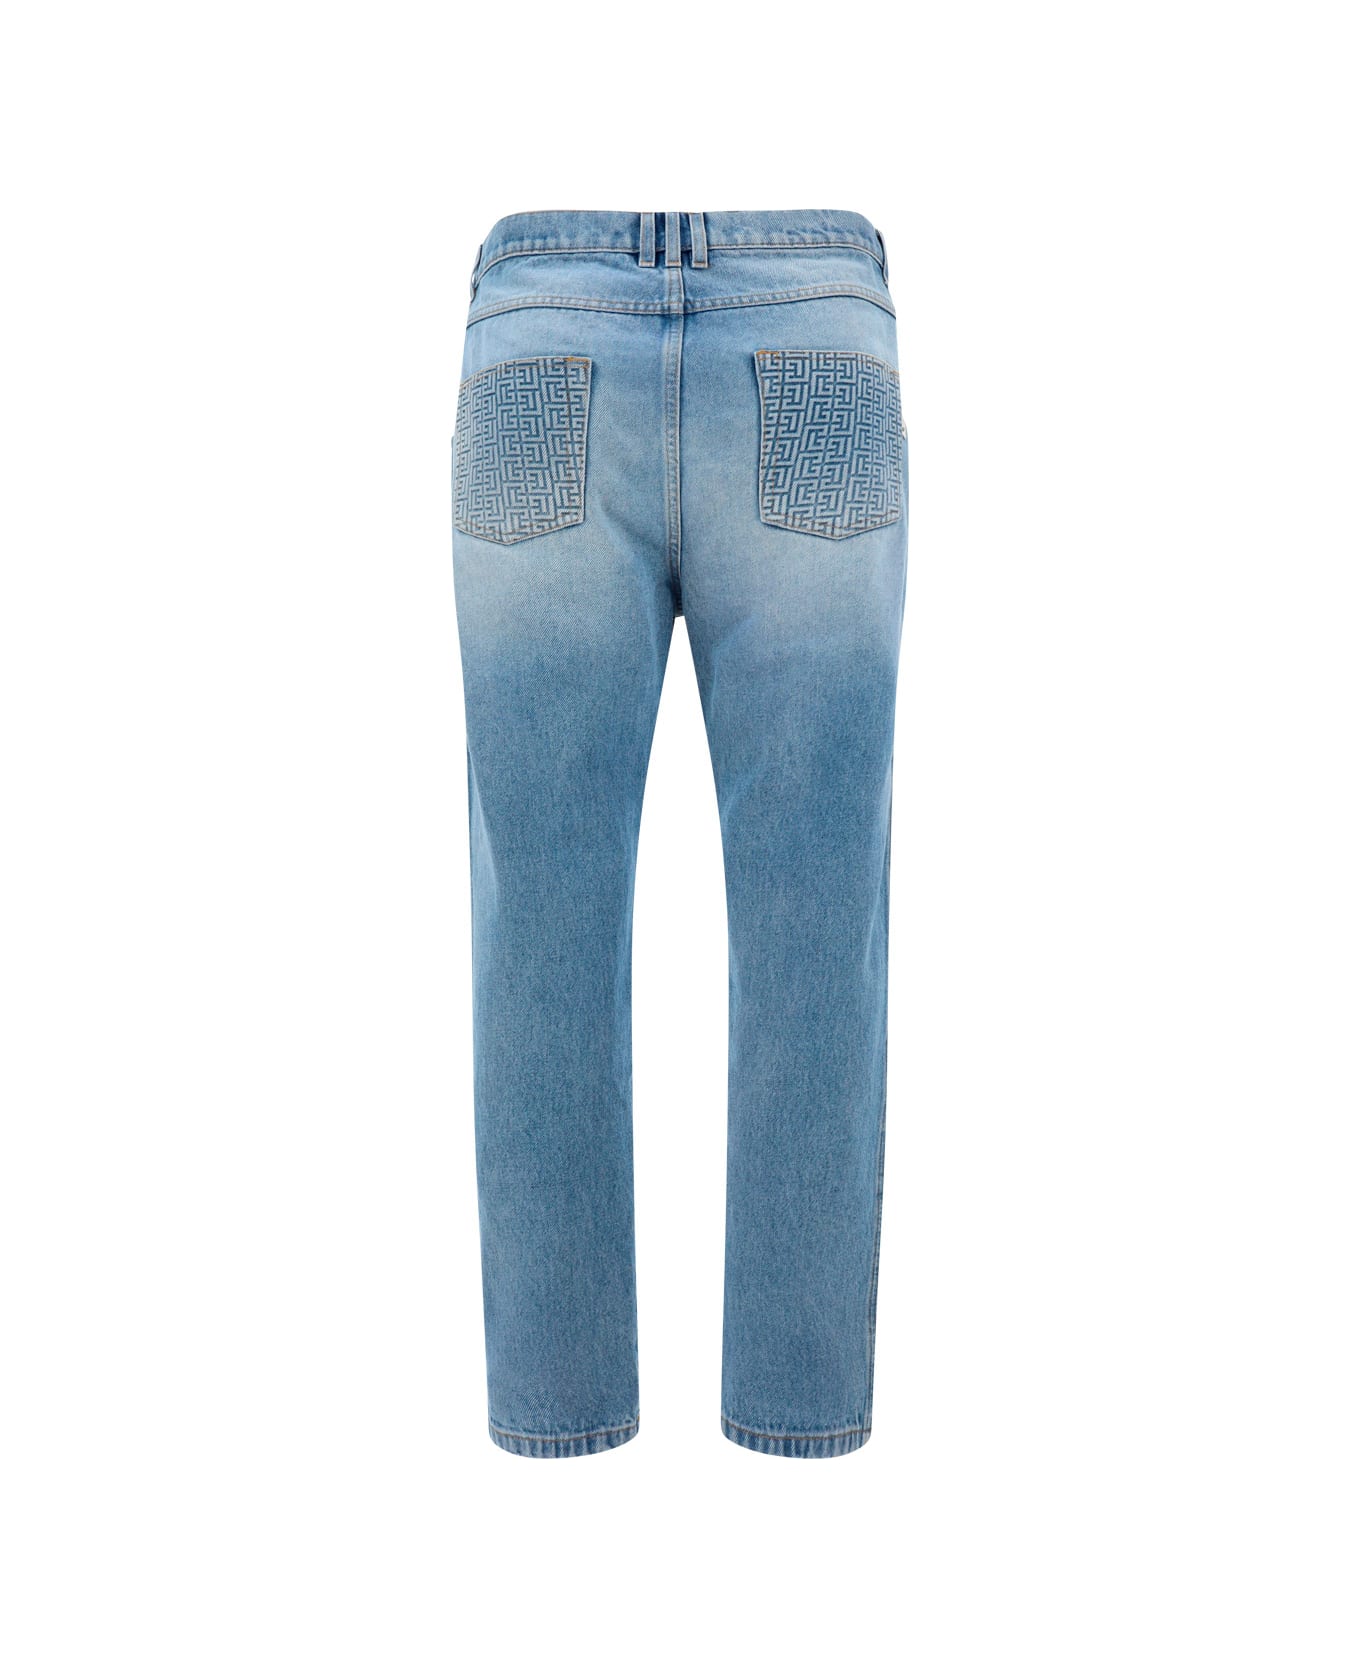 Balmain low-top Monogram Jeans - Bleu Jean